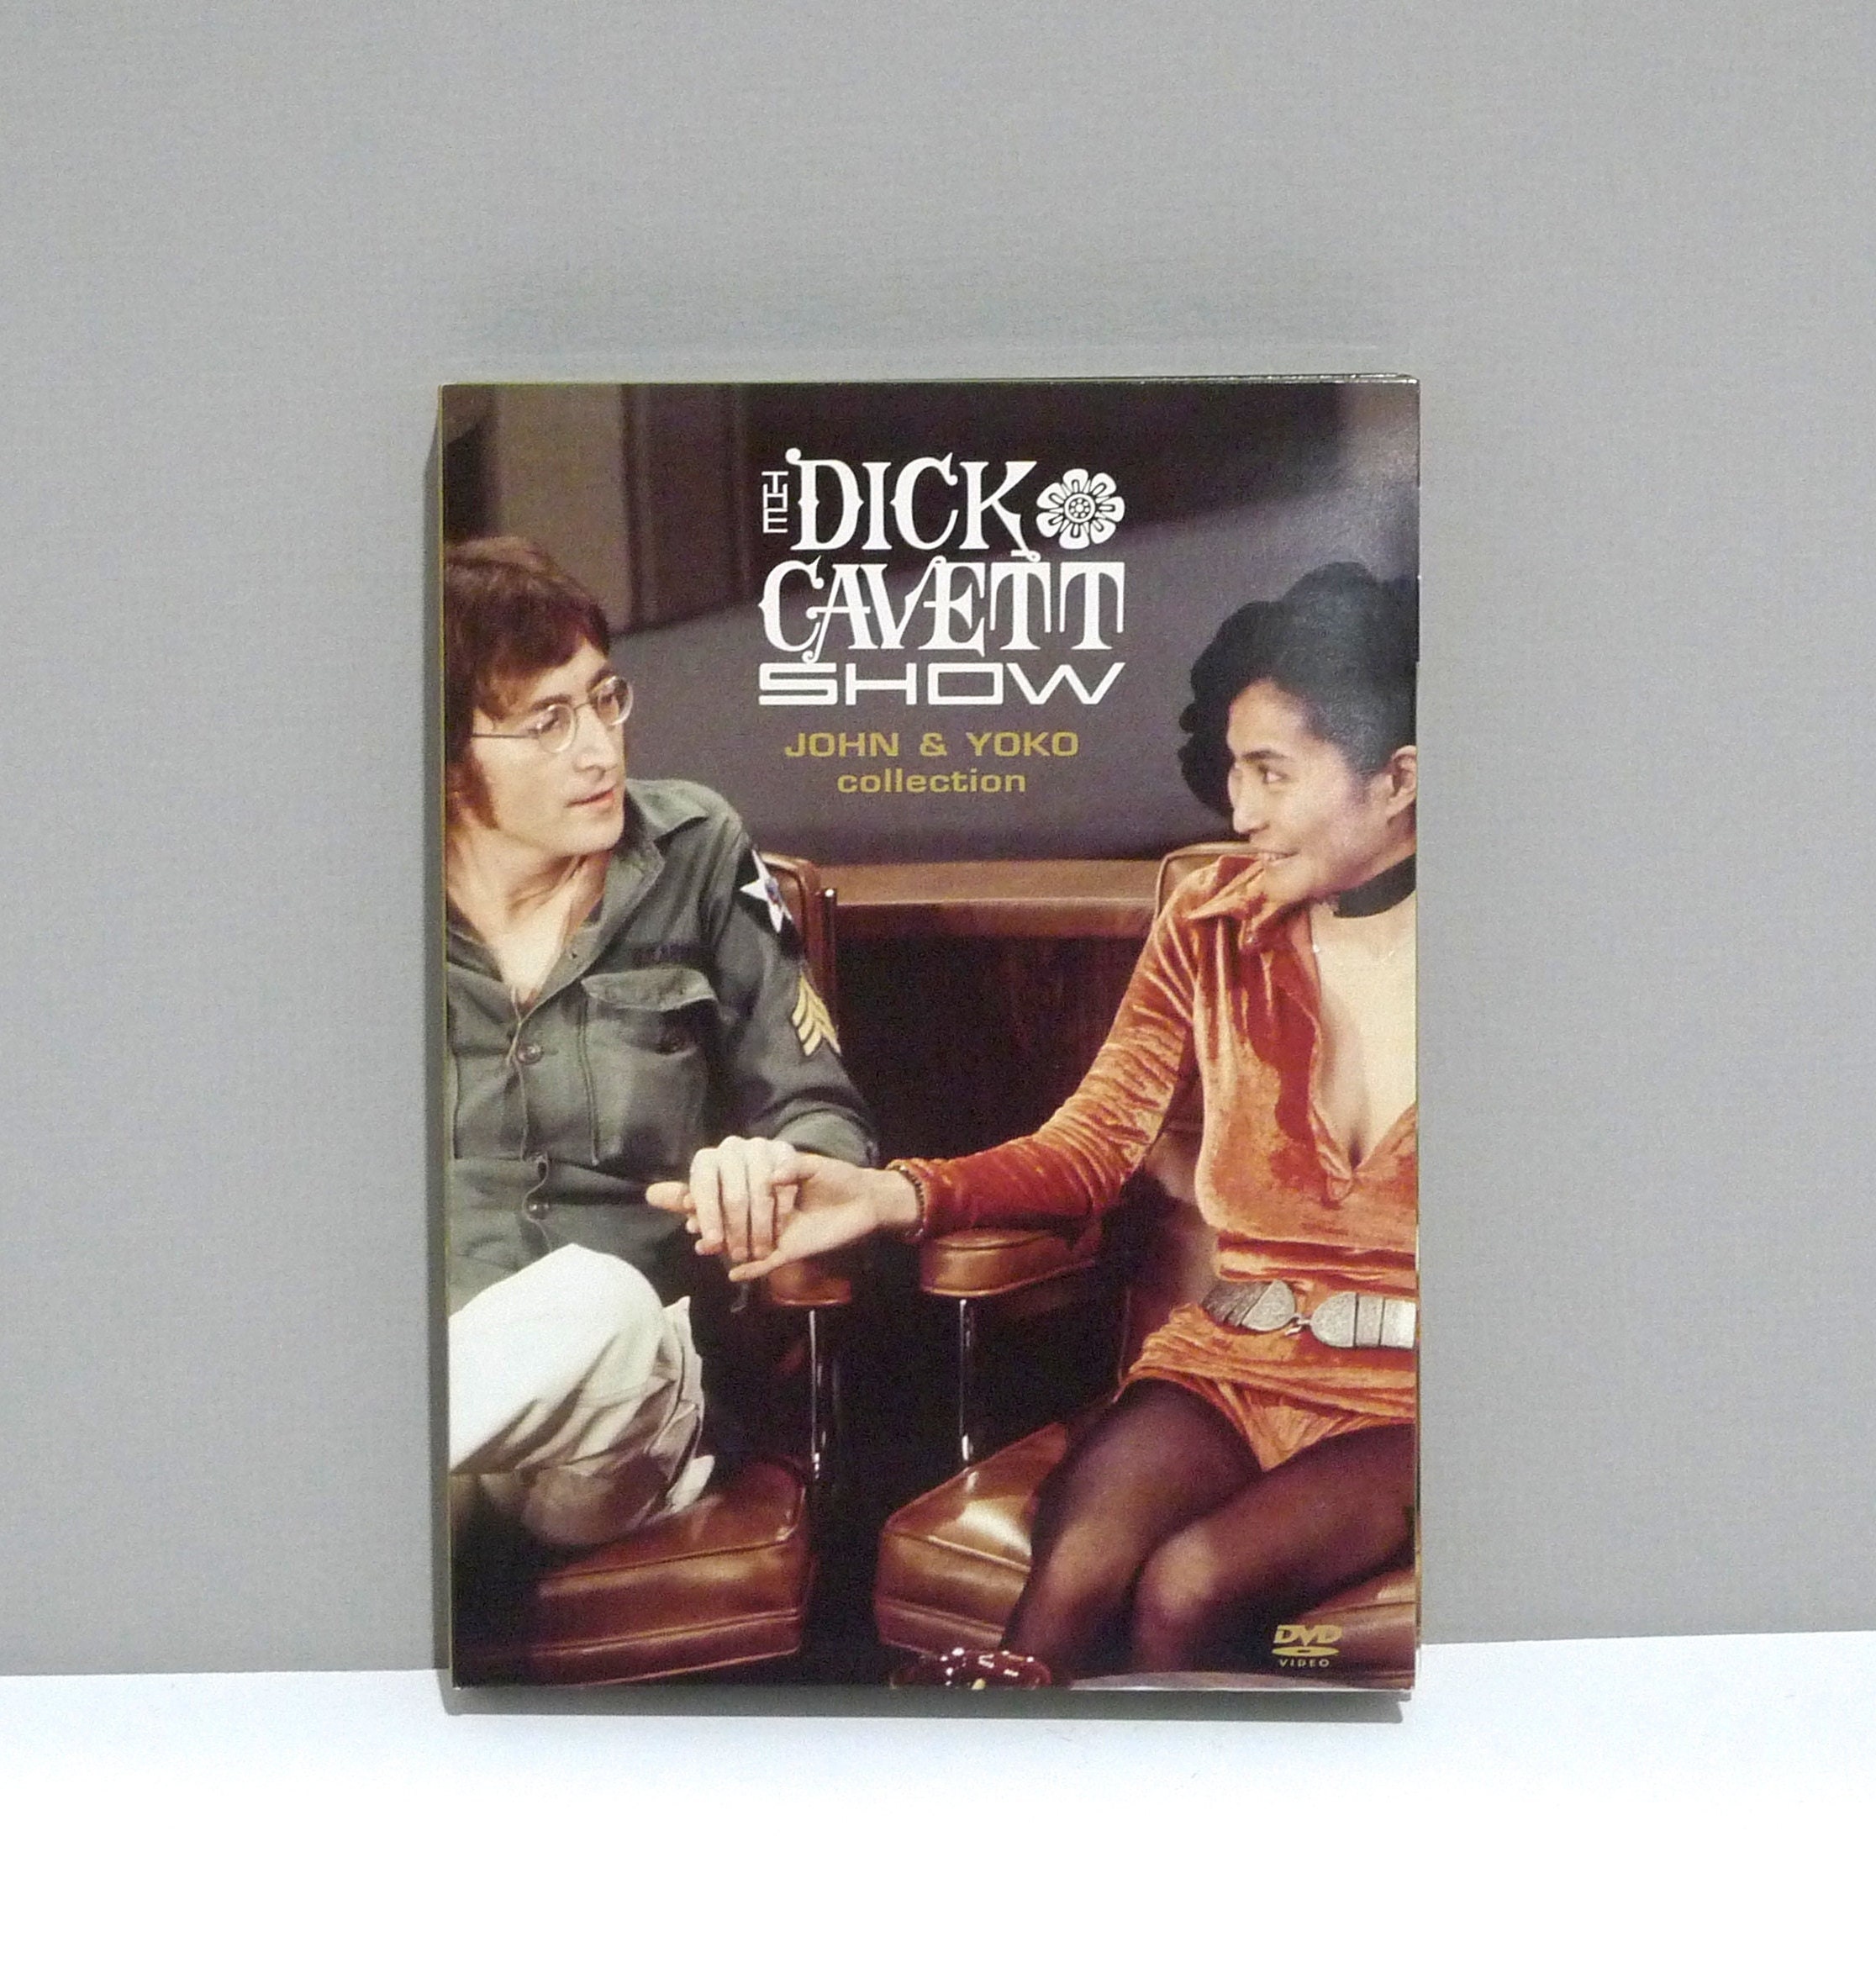 Video　John　Yoko　Etsy　Collection　Show　the　Dick　Cavett　DVD